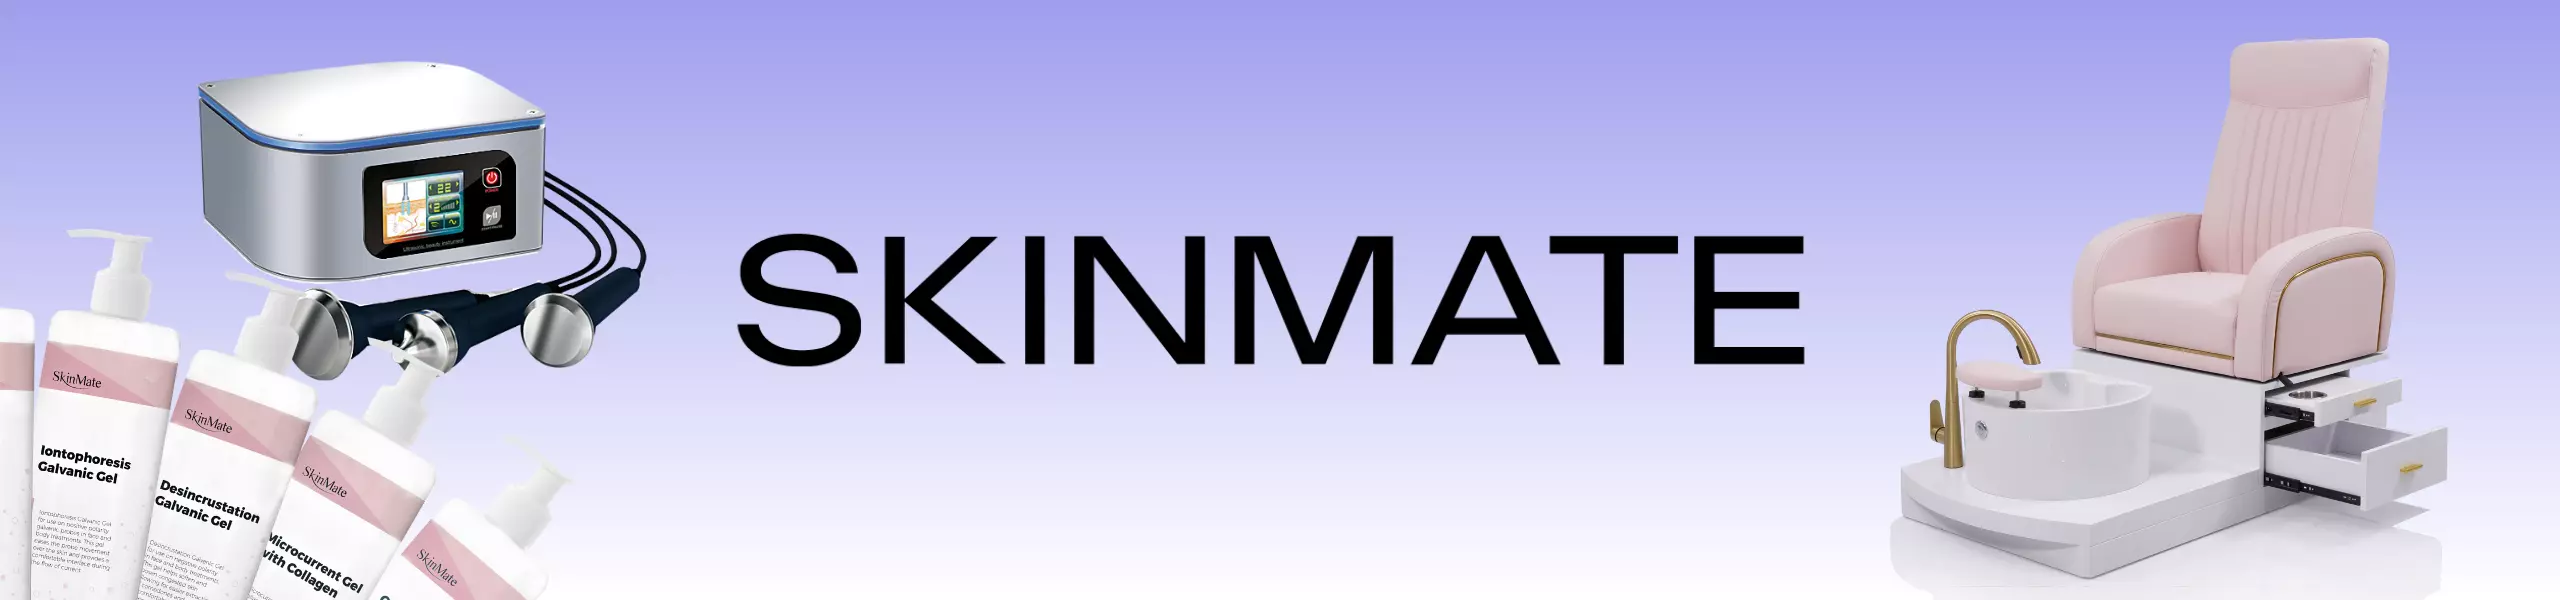 skinmate banner.png